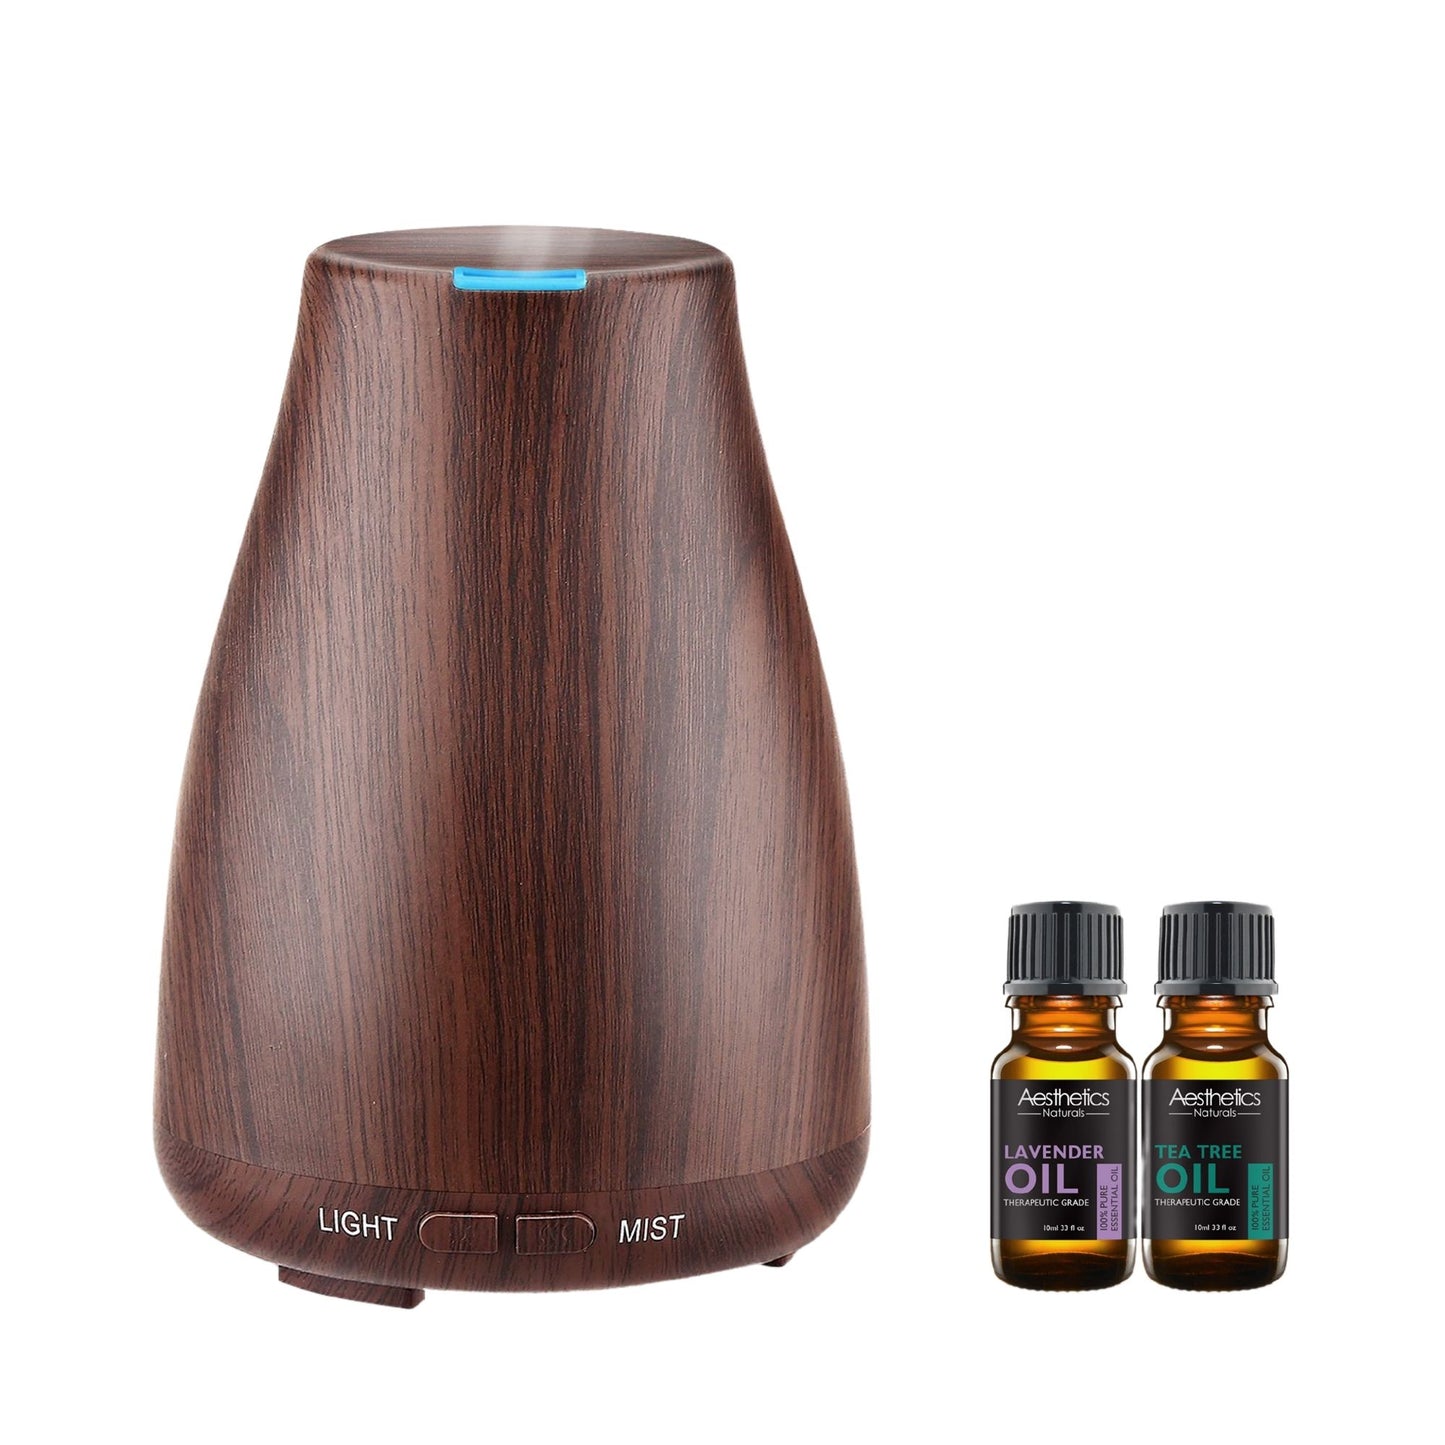 Aesthetics Ultrasonic Wood-Finish Aroma Diffuser with Optional Oils